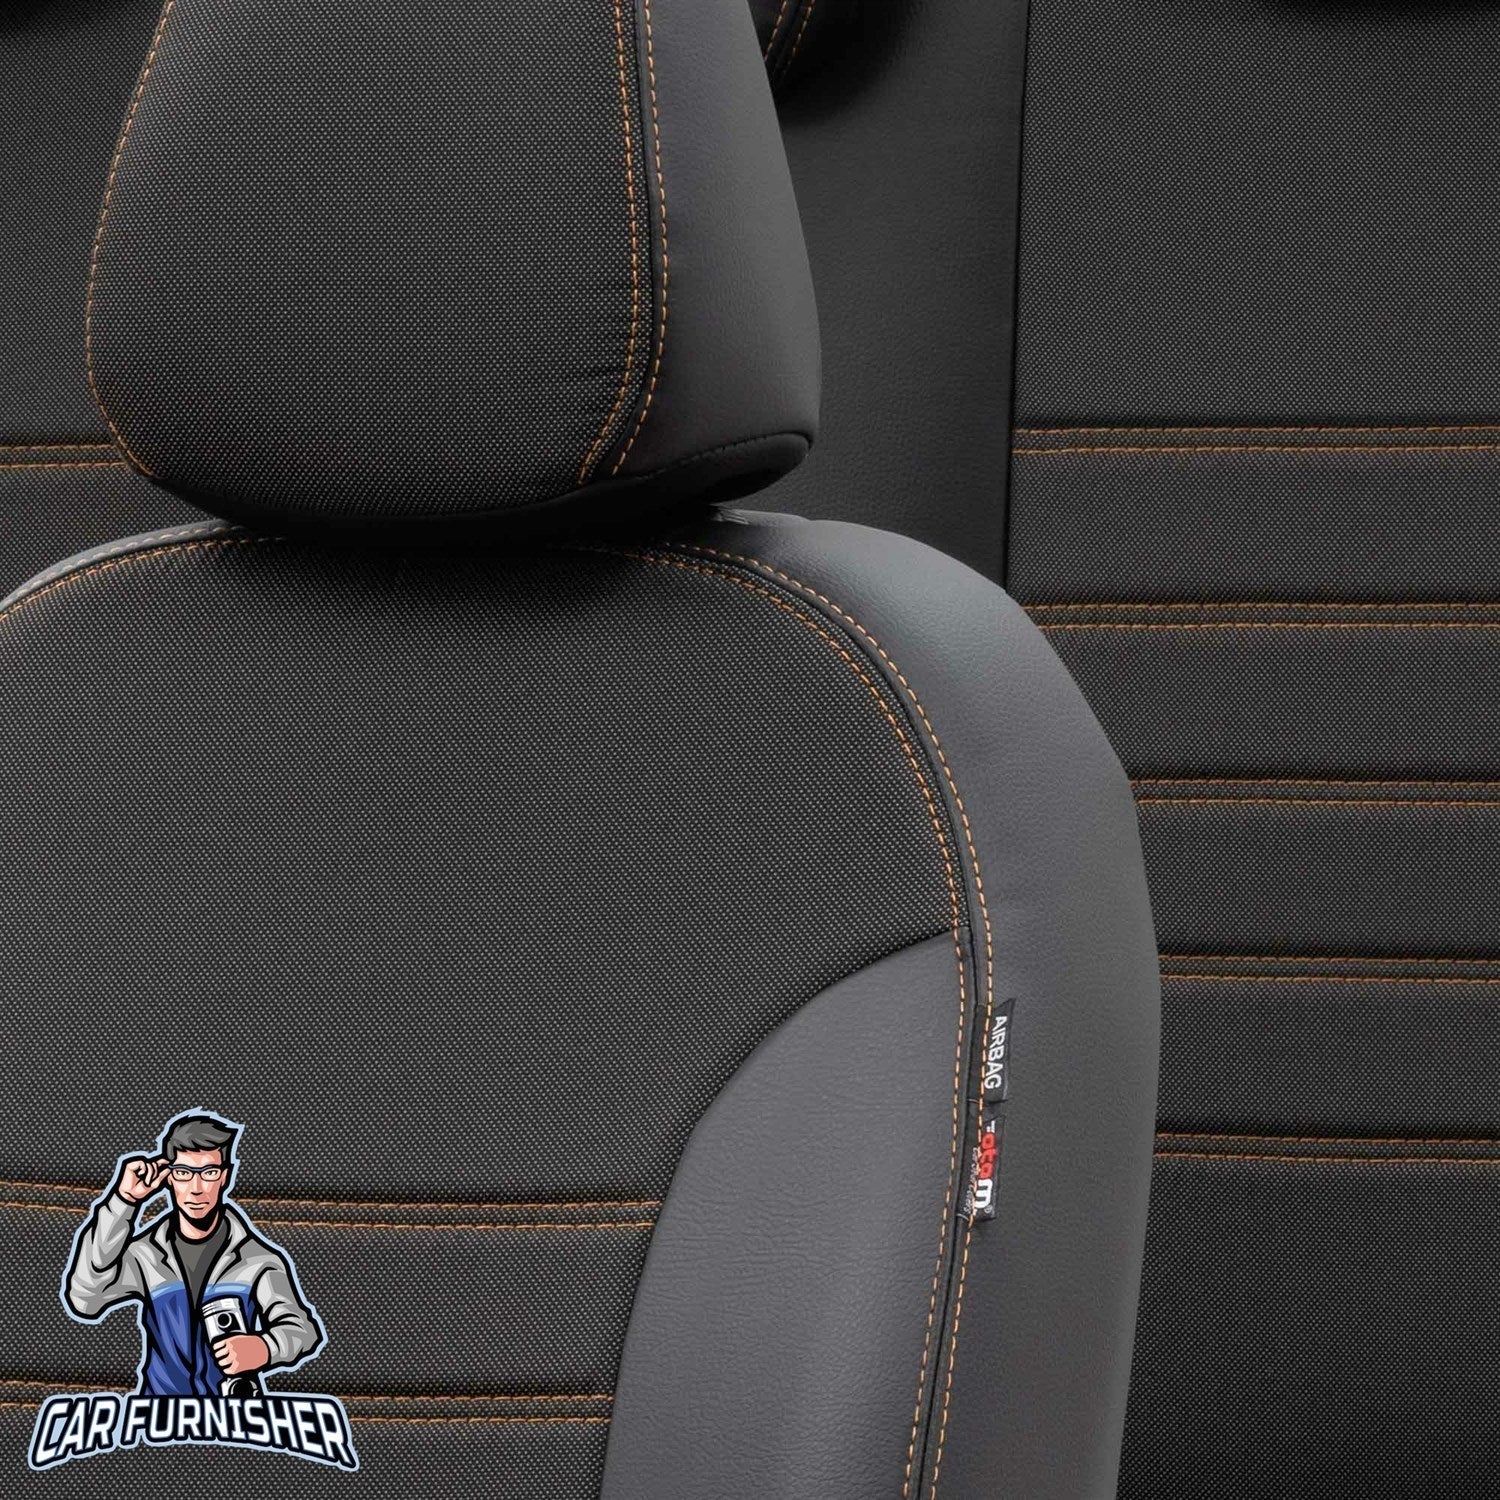 Fiat Tipo Seat Covers Paris Leather & Jacquard Design Dark Beige Leather & Jacquard Fabric